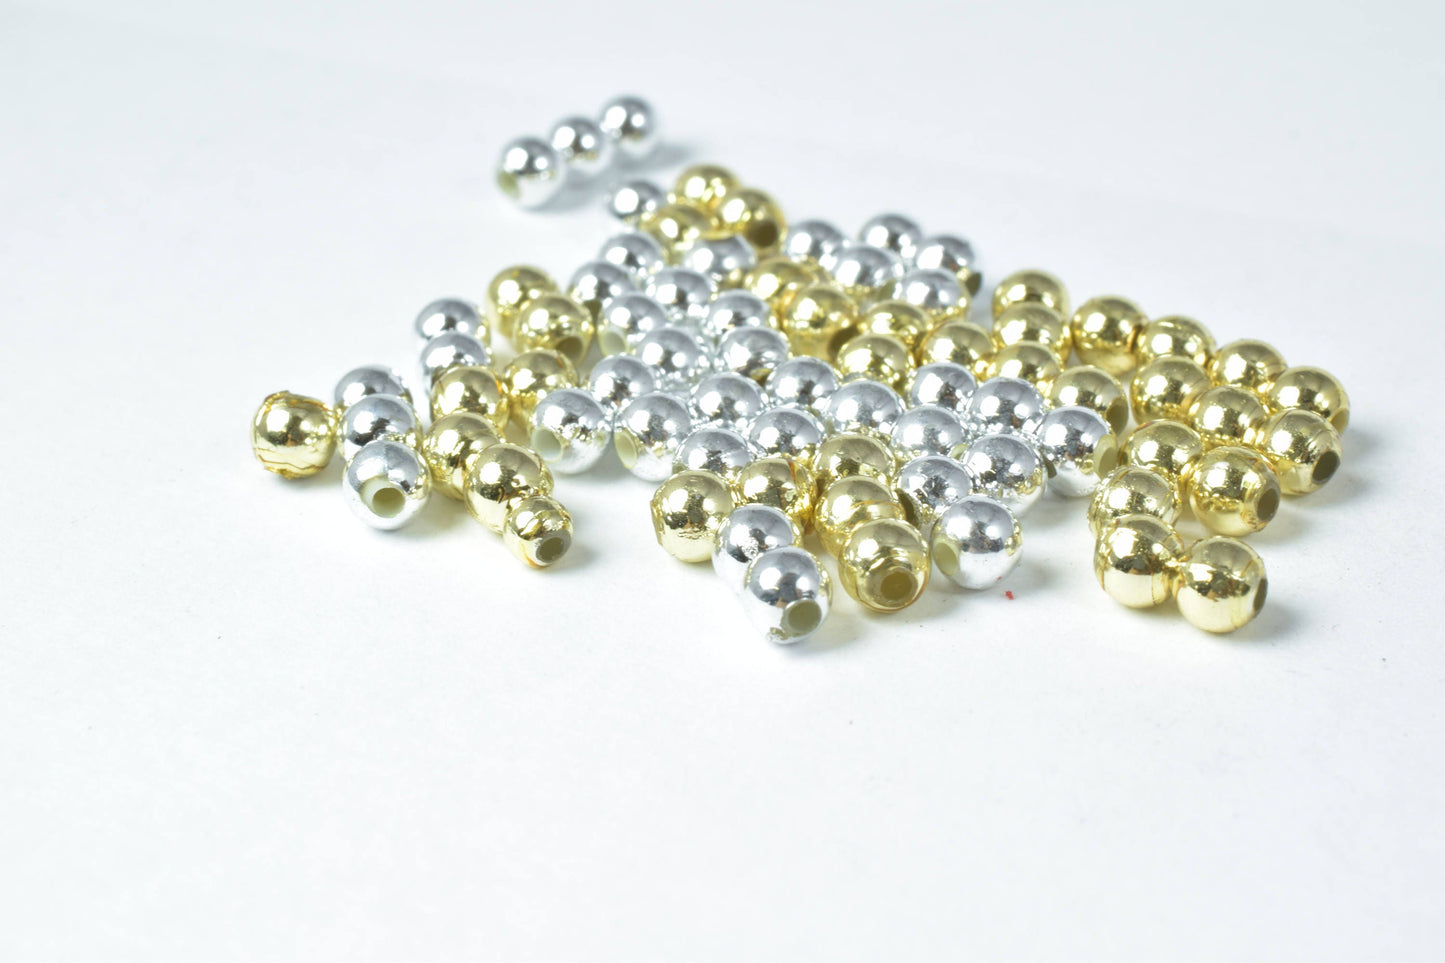 4mm Plastic Petite Gold/Silver Round Beads, Plastic Gold/Silver Beading Tools,Plastic 1000pcs Plastic Round Beads Jewelry Making